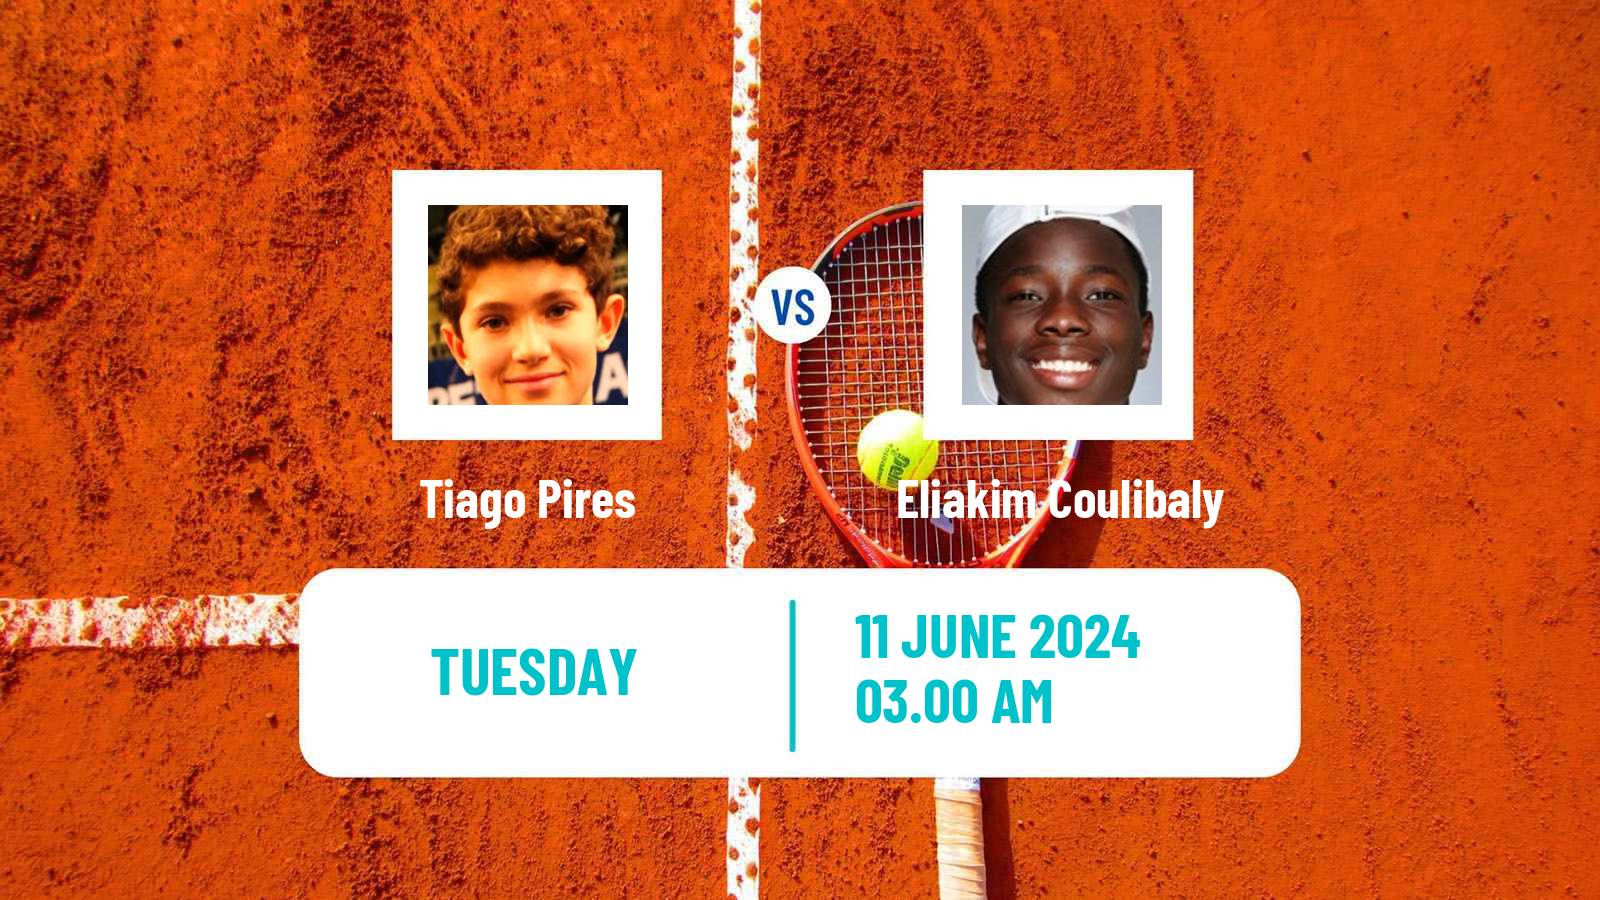 Tennis ITF M25 Villeneuve Loubet H Men Tiago Pires - Eliakim Coulibaly